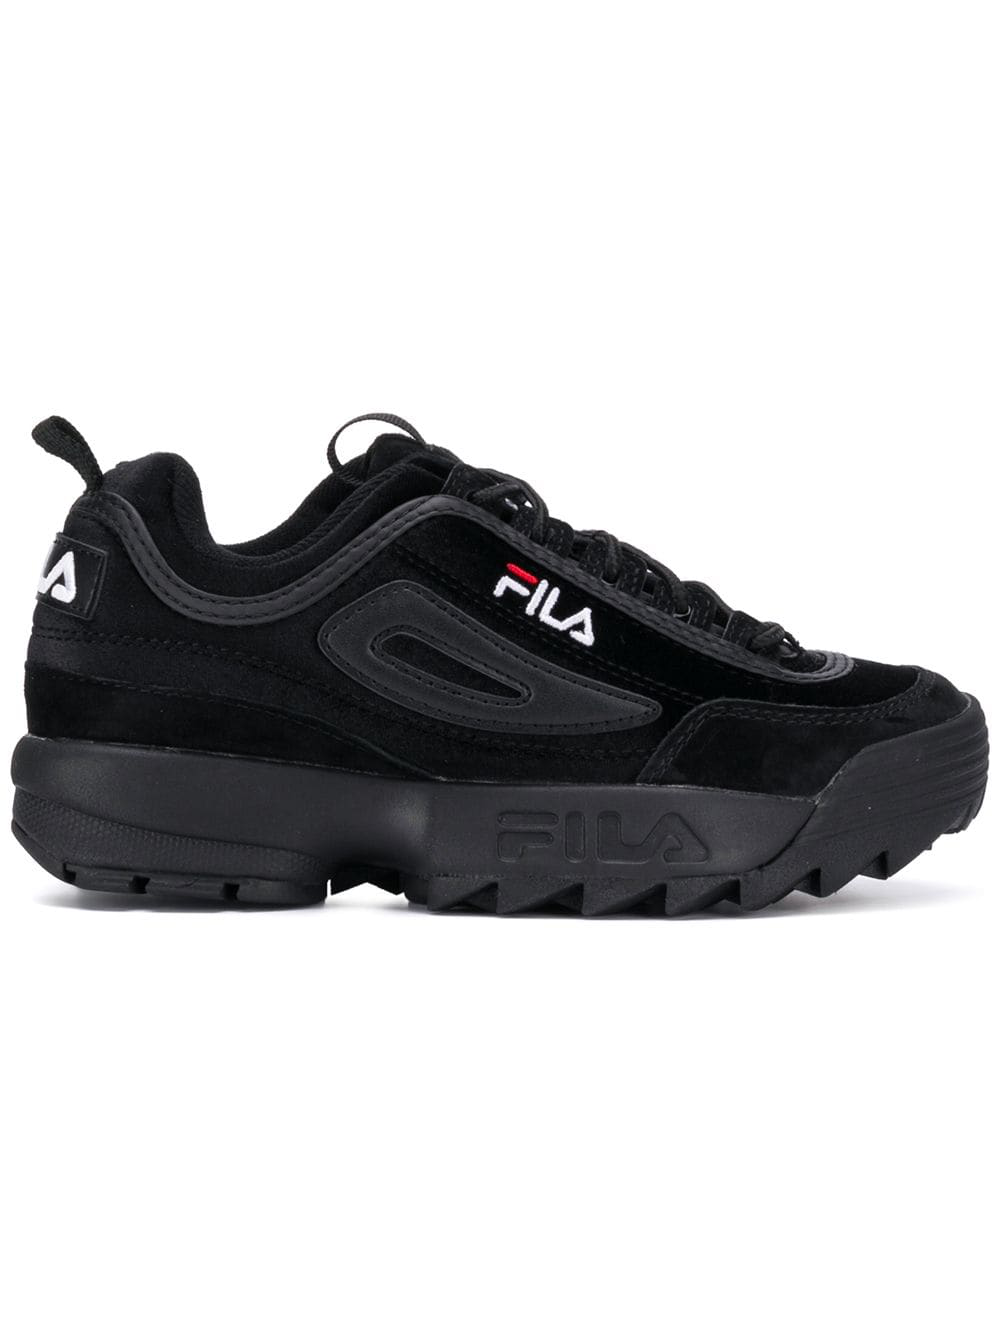 Fila Disruptor V-low Sneakers - Black | ModeSens